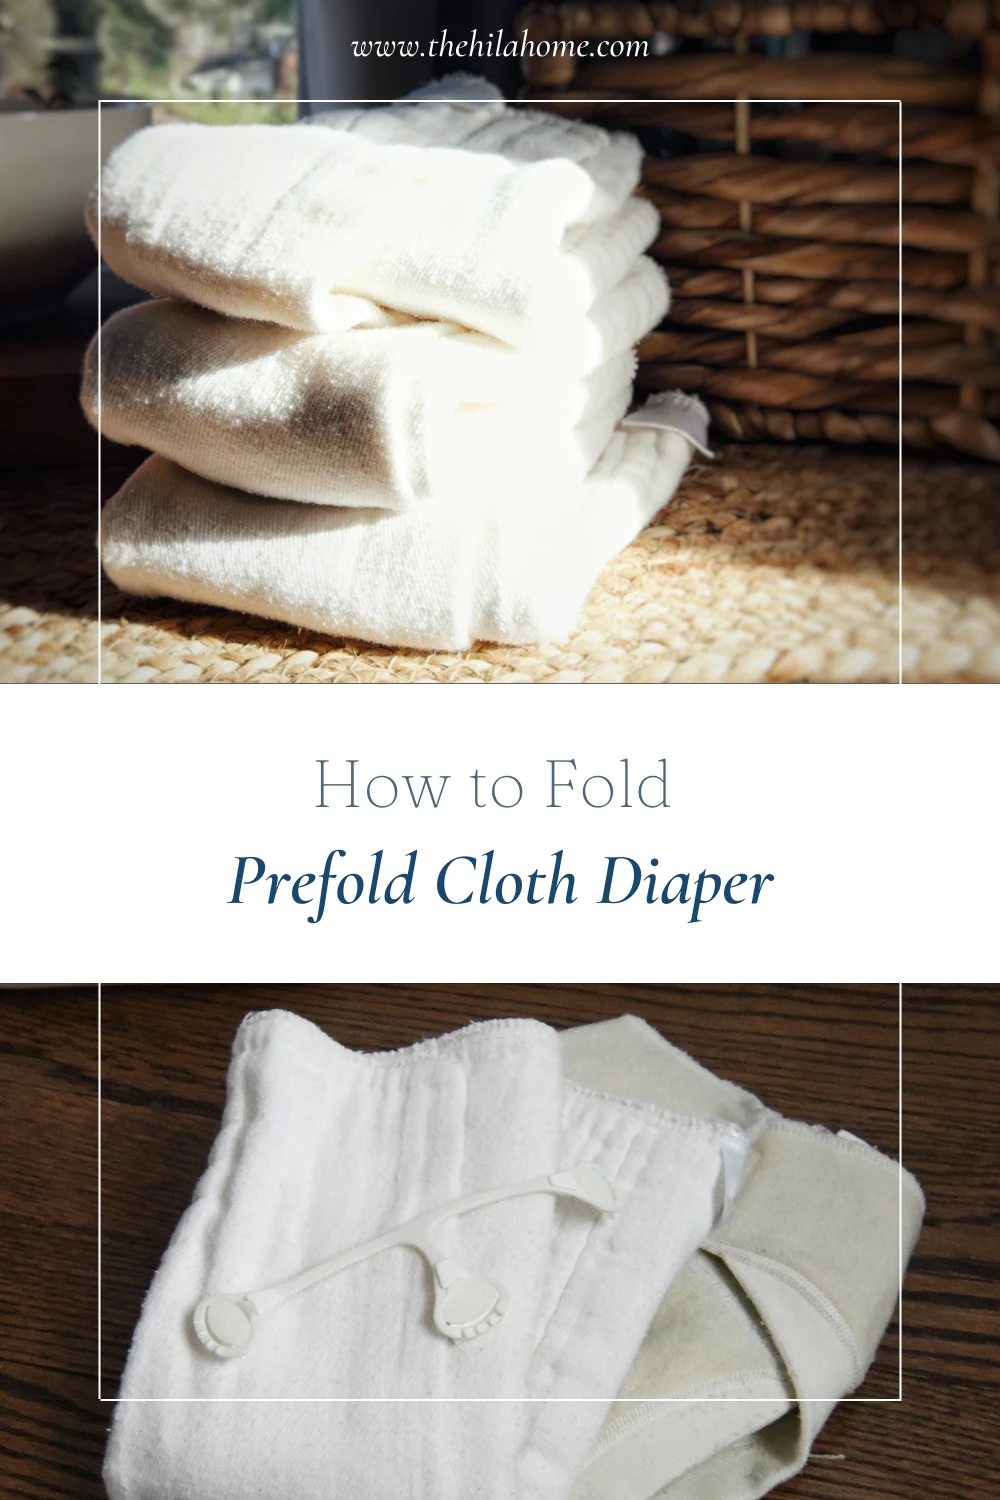 How to Fold a Prefold Cloth Diaper